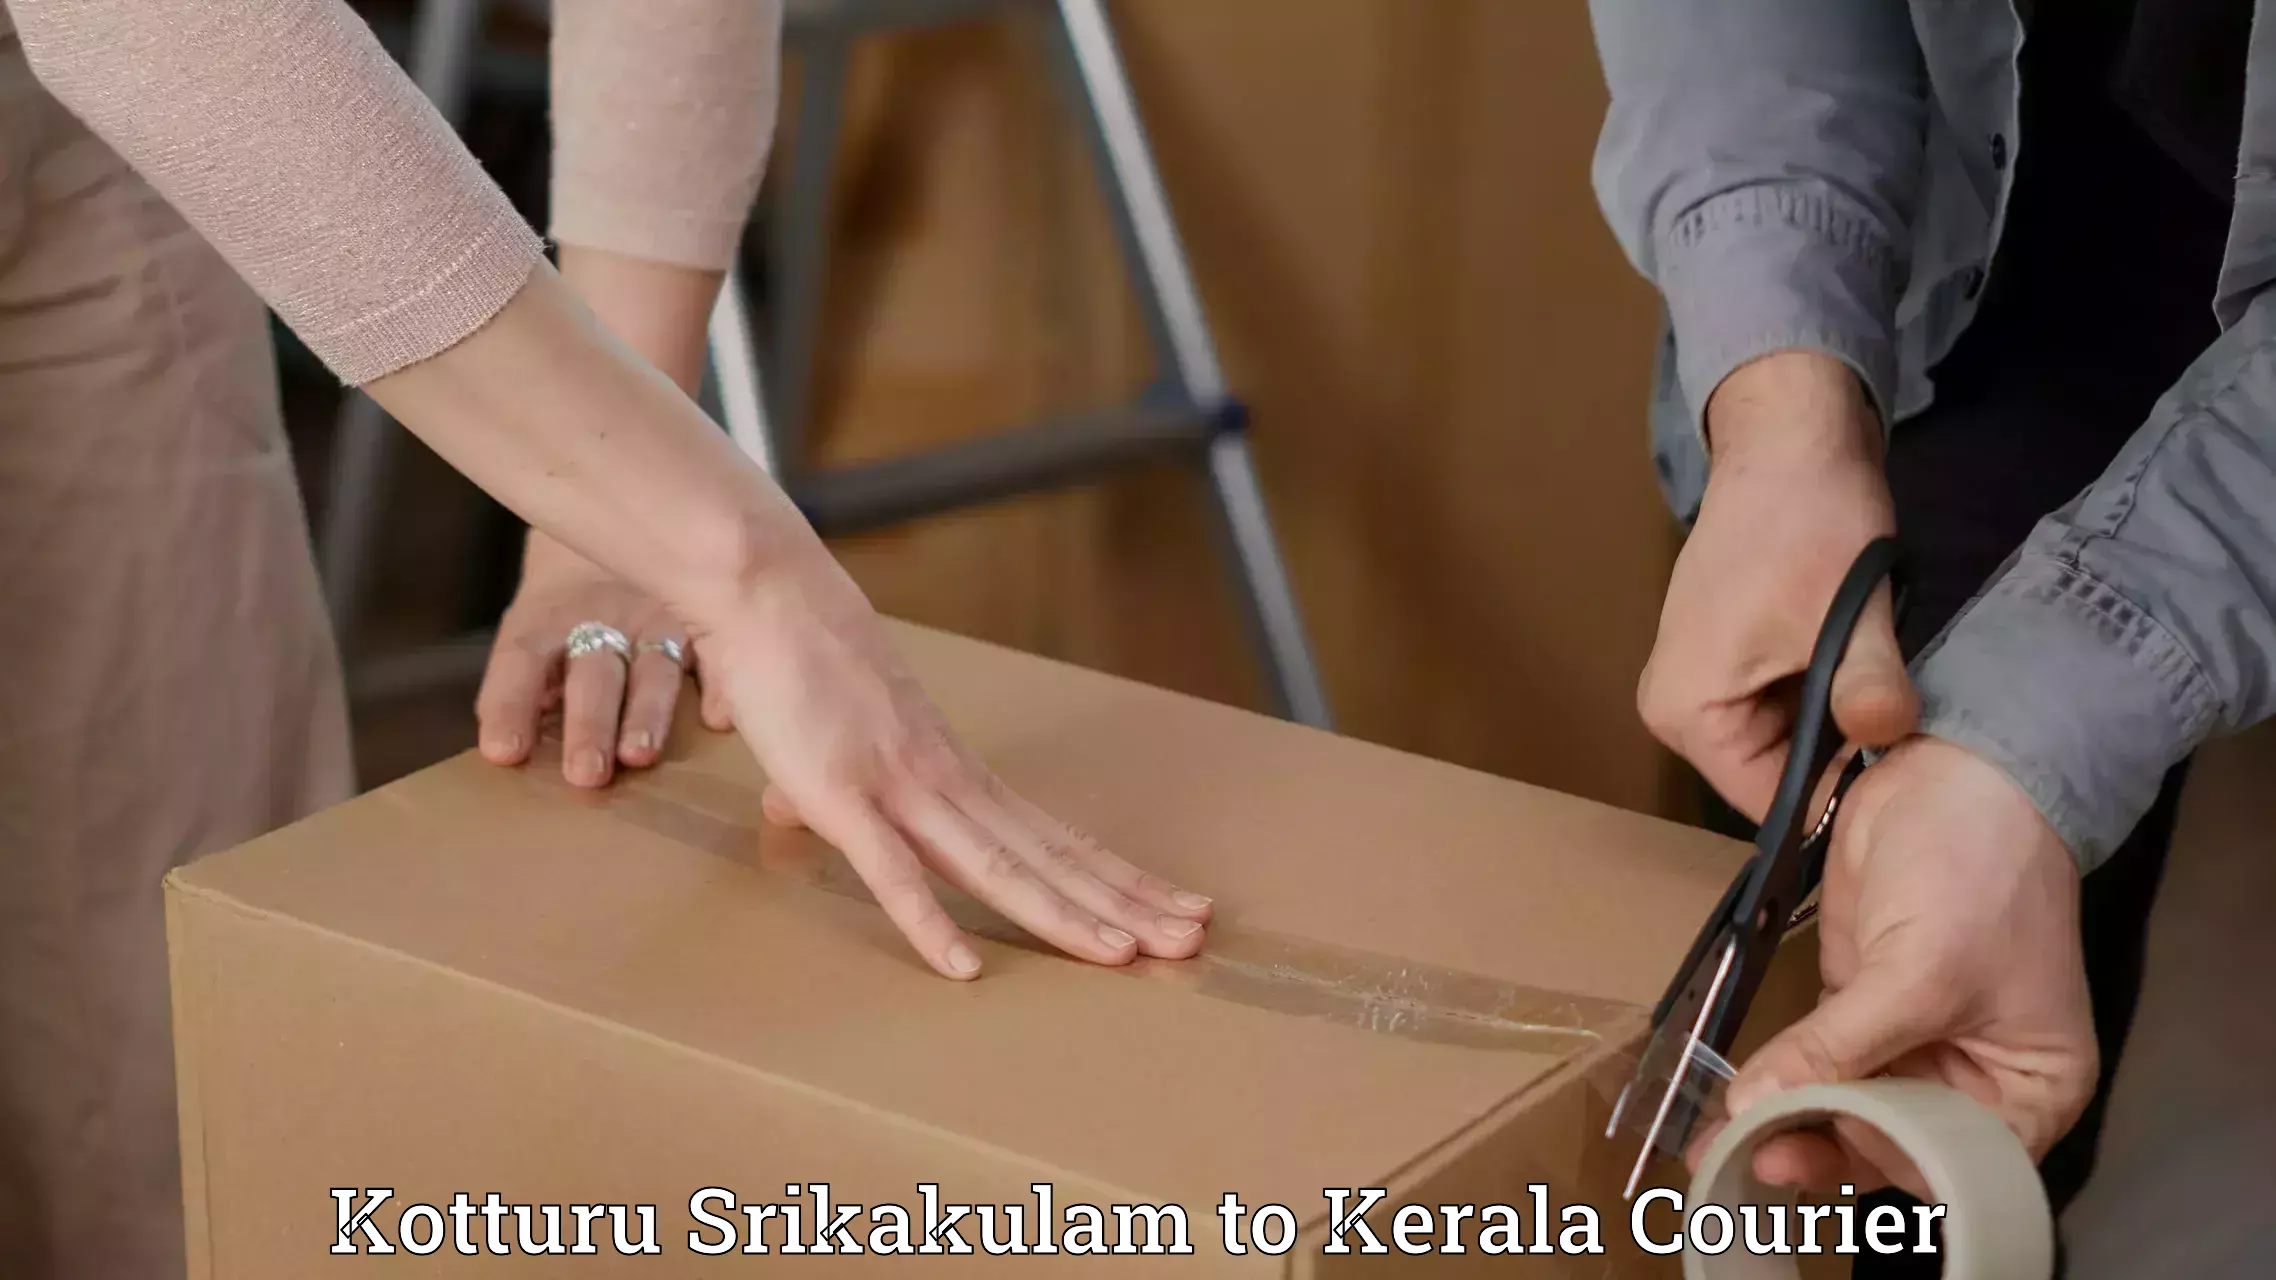 Bulk courier orders Kotturu Srikakulam to Malappuram